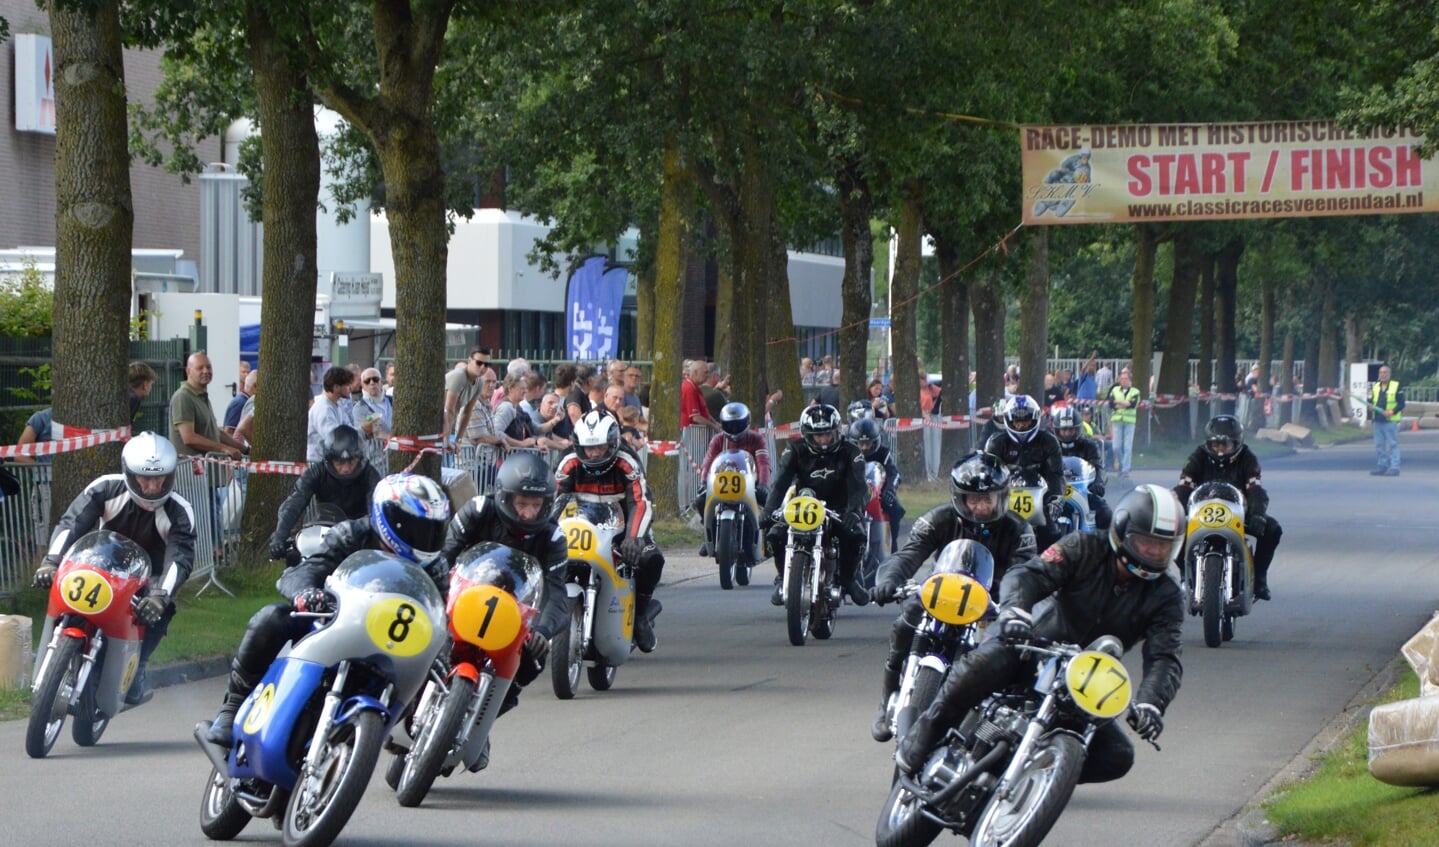 27e Classic Races Veenendaal